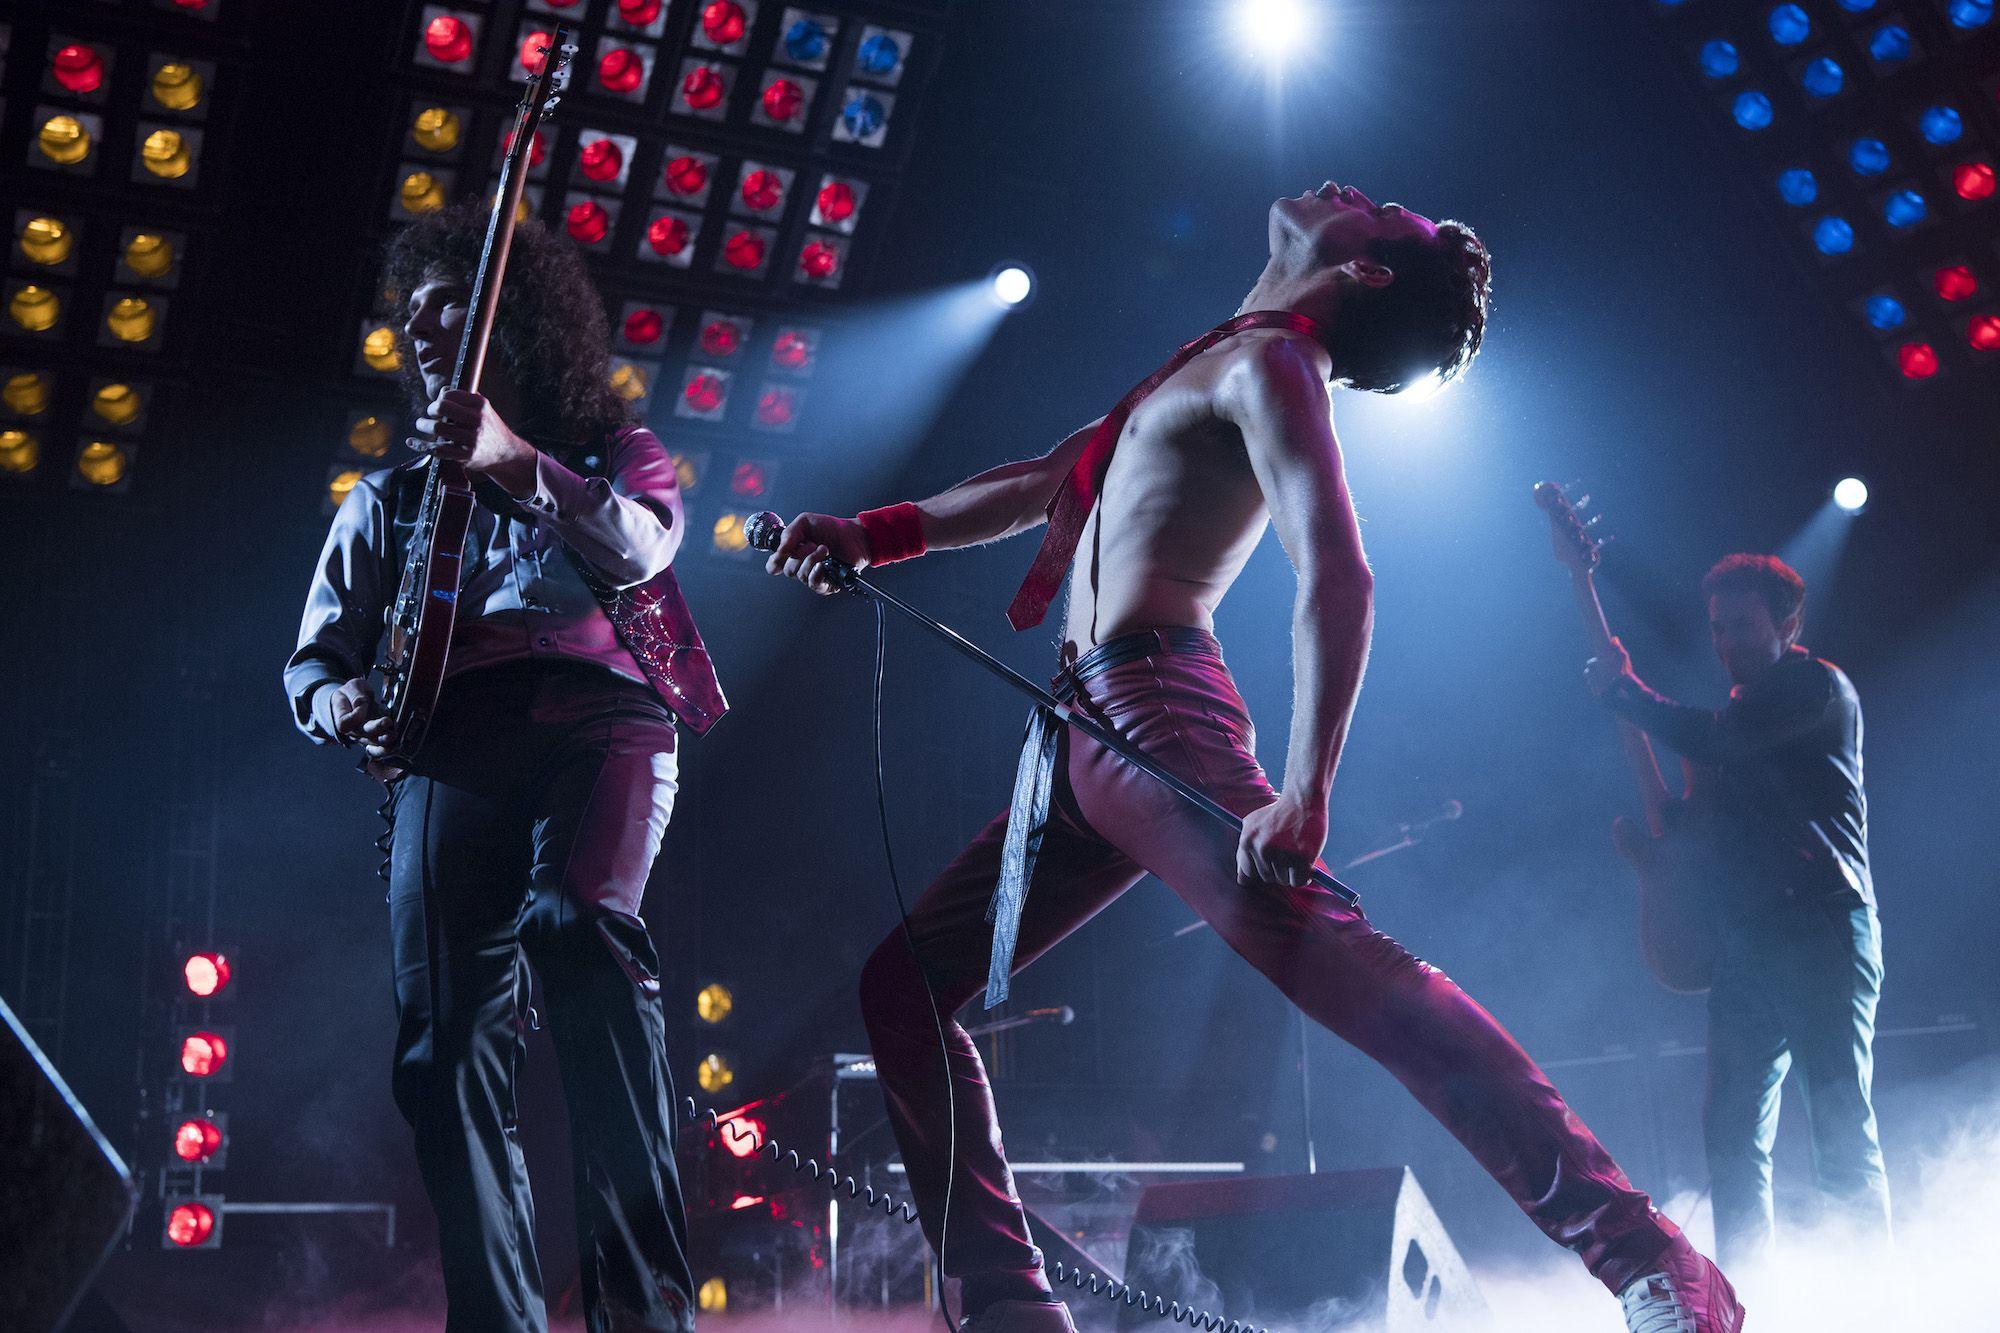 2000x1333 Hình ảnh Bohemian Rhapsody thể hiện Rami Malek trong vai Freddie